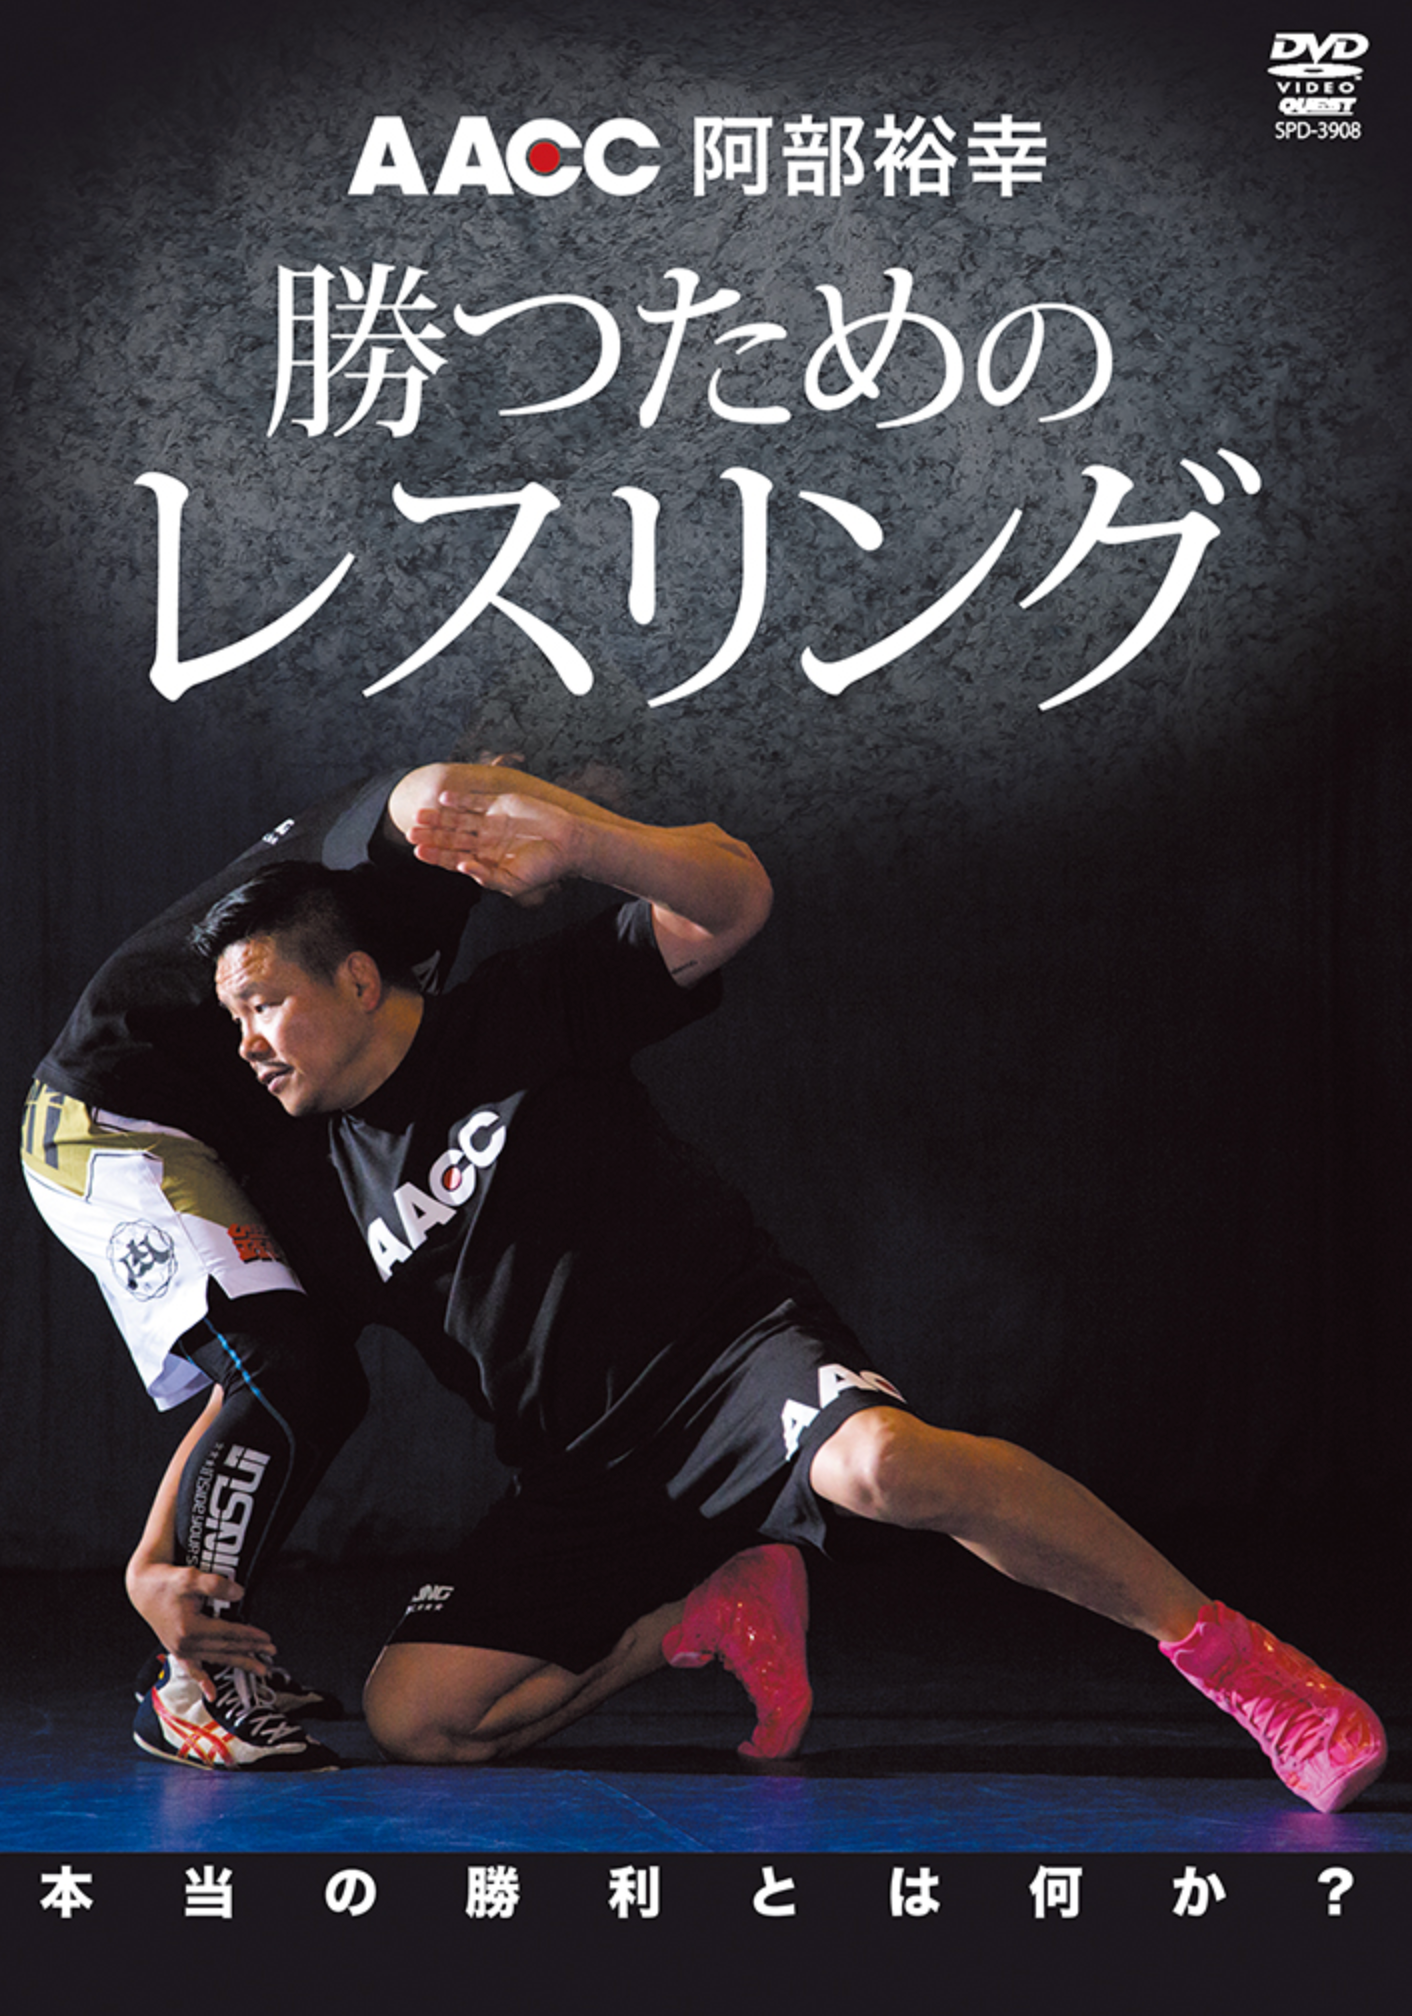 AACC Winning Wrestling DVD with Hiroyuki Abe - Budovideos Inc